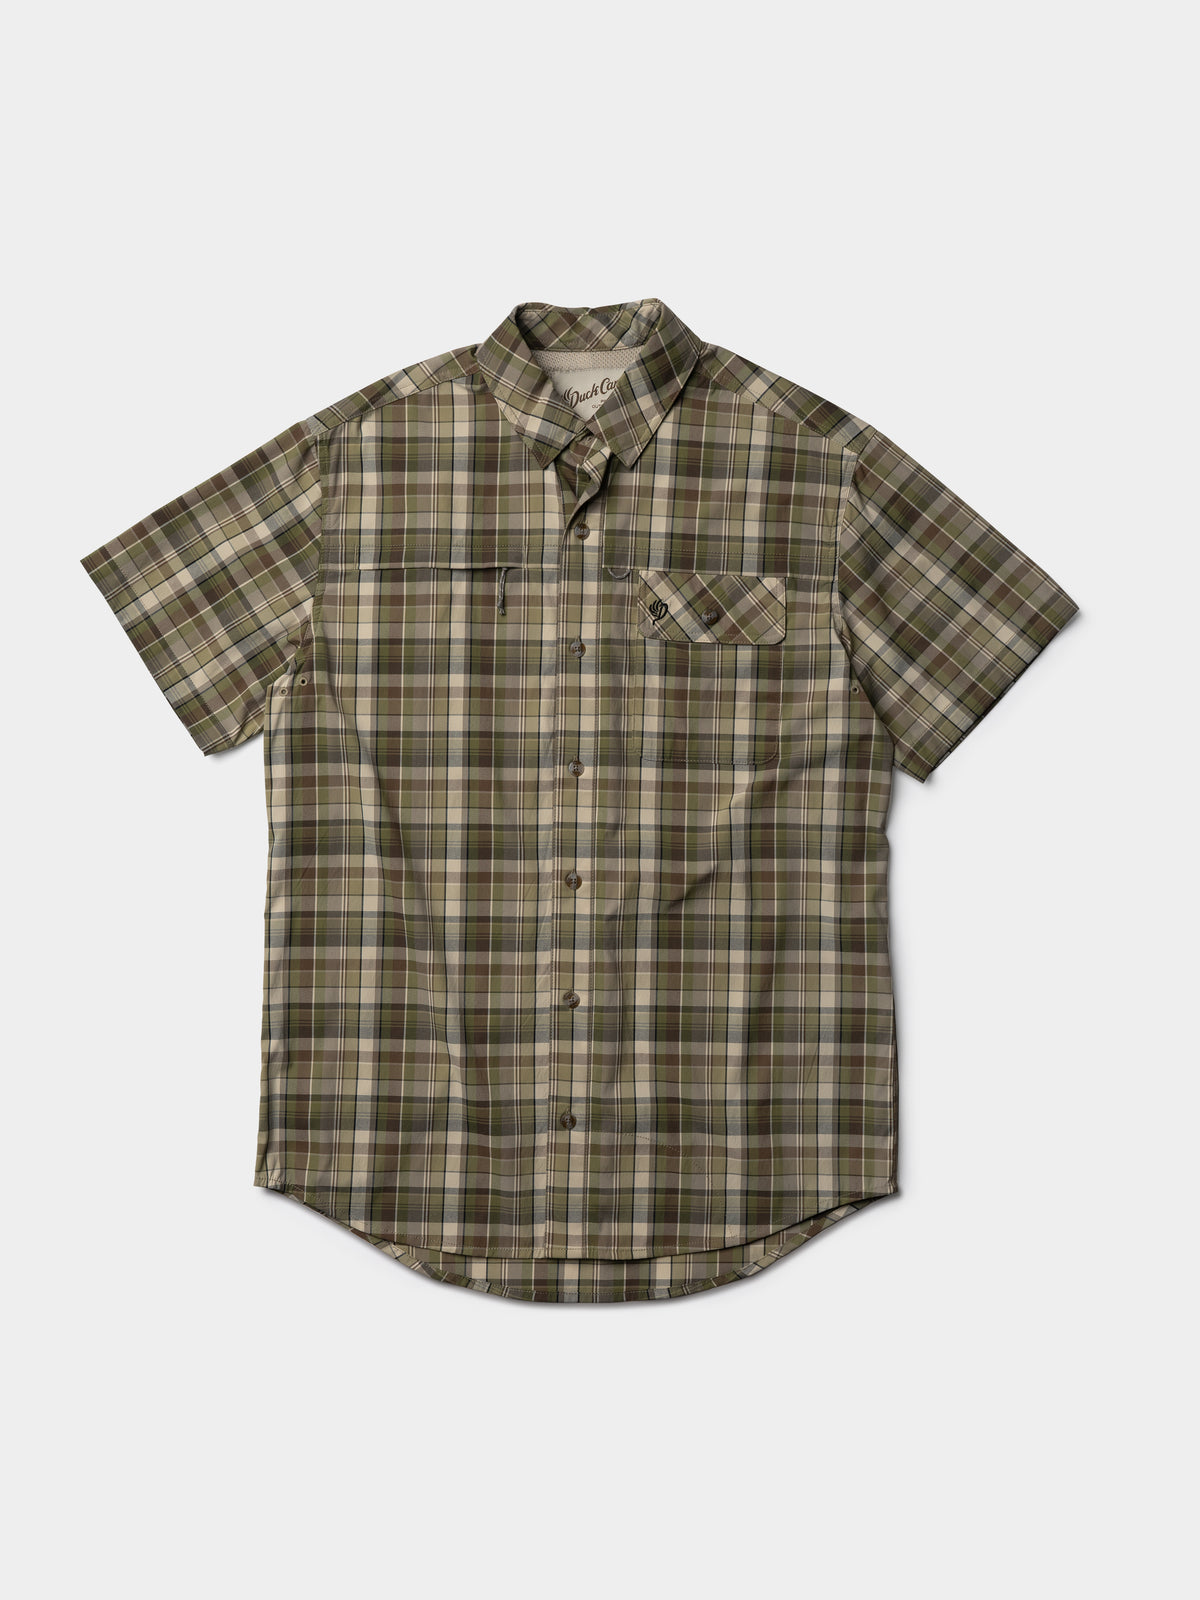 Signature Fishing Shirt - Short Sleeve - Teton Plaid, L